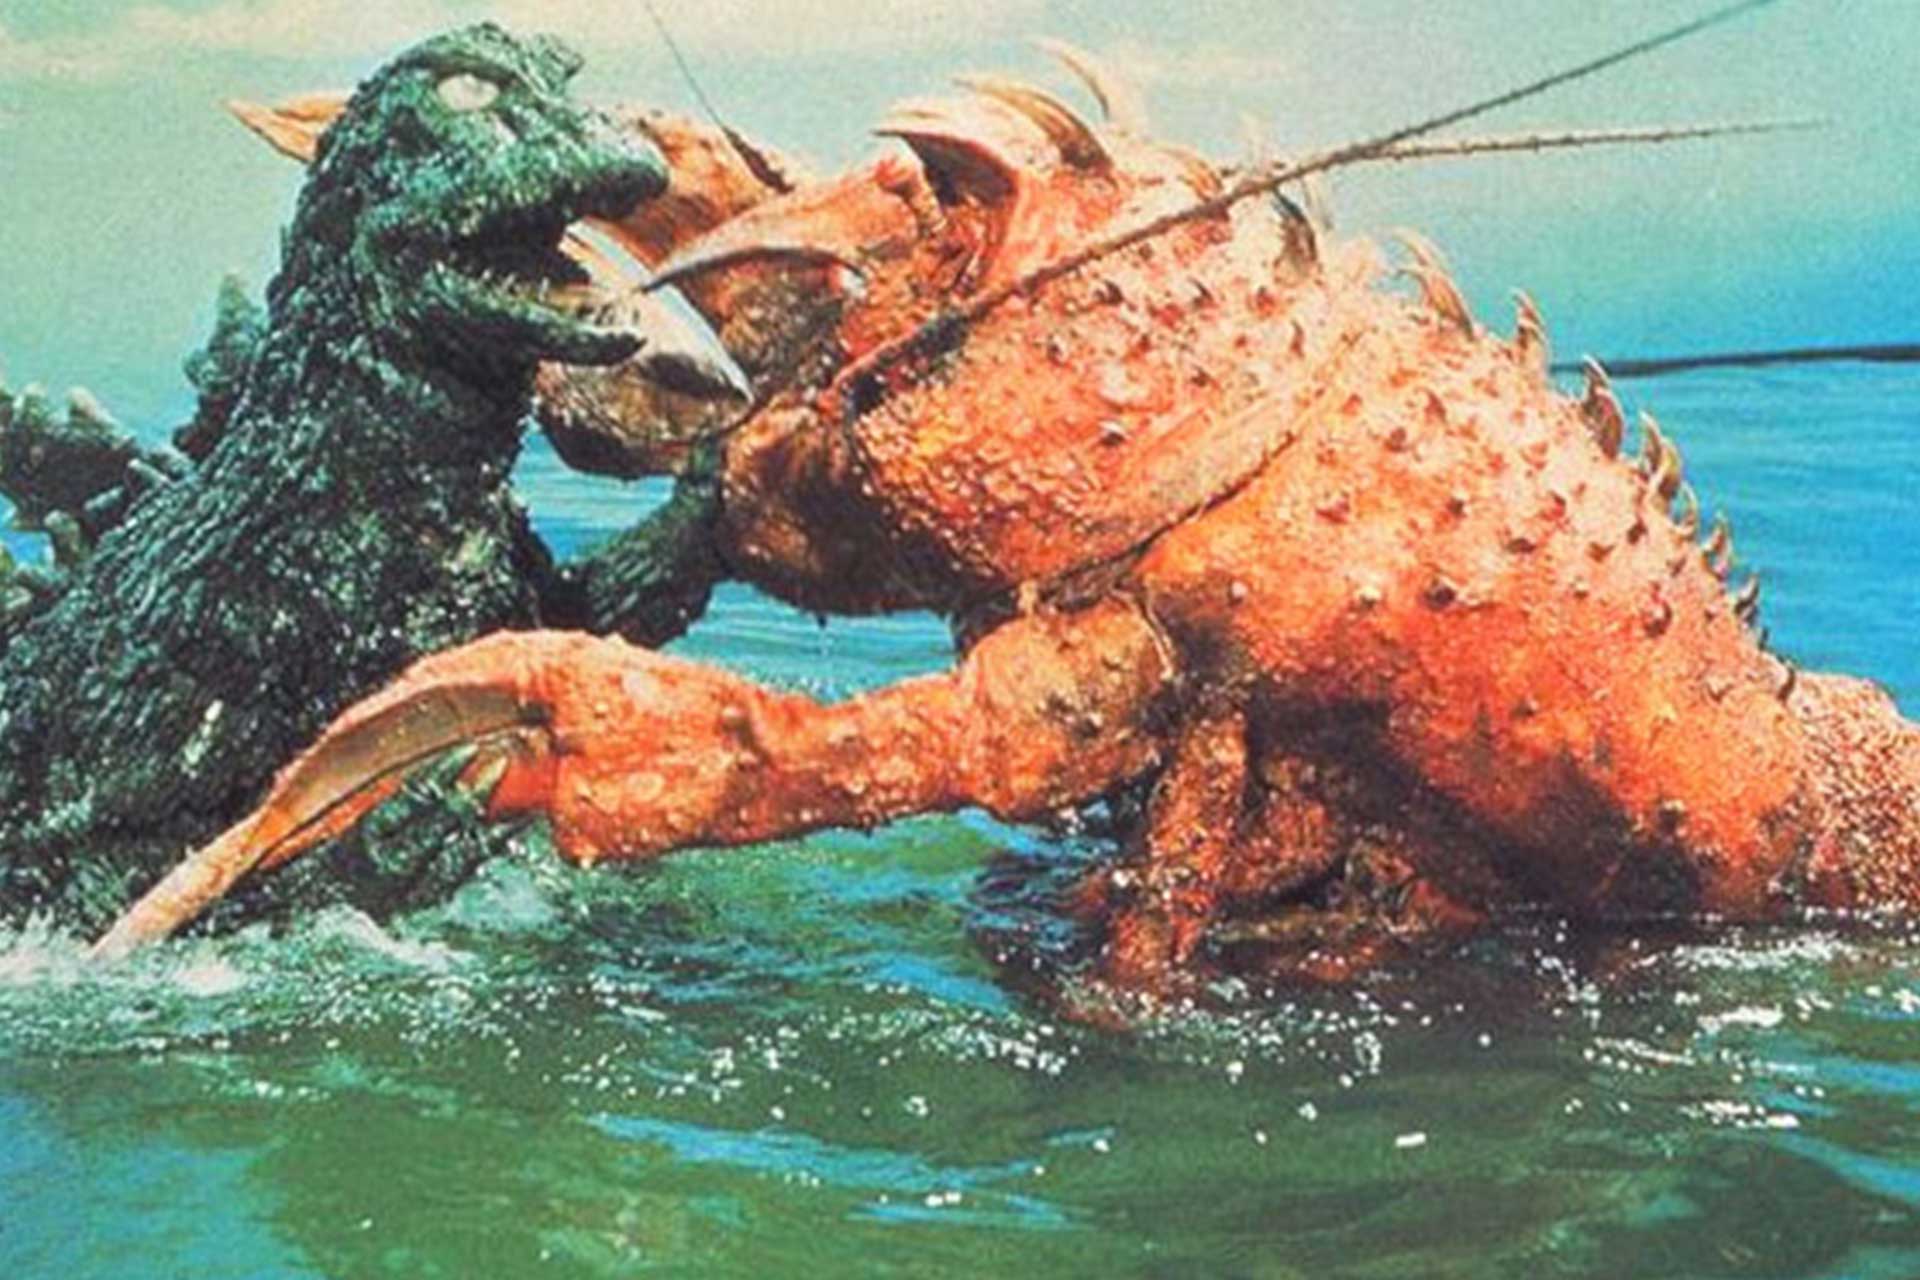 From the series ‘Cinemassacre's Monster Madness,’episode 7, Godzillathon against a gigantic shrimp